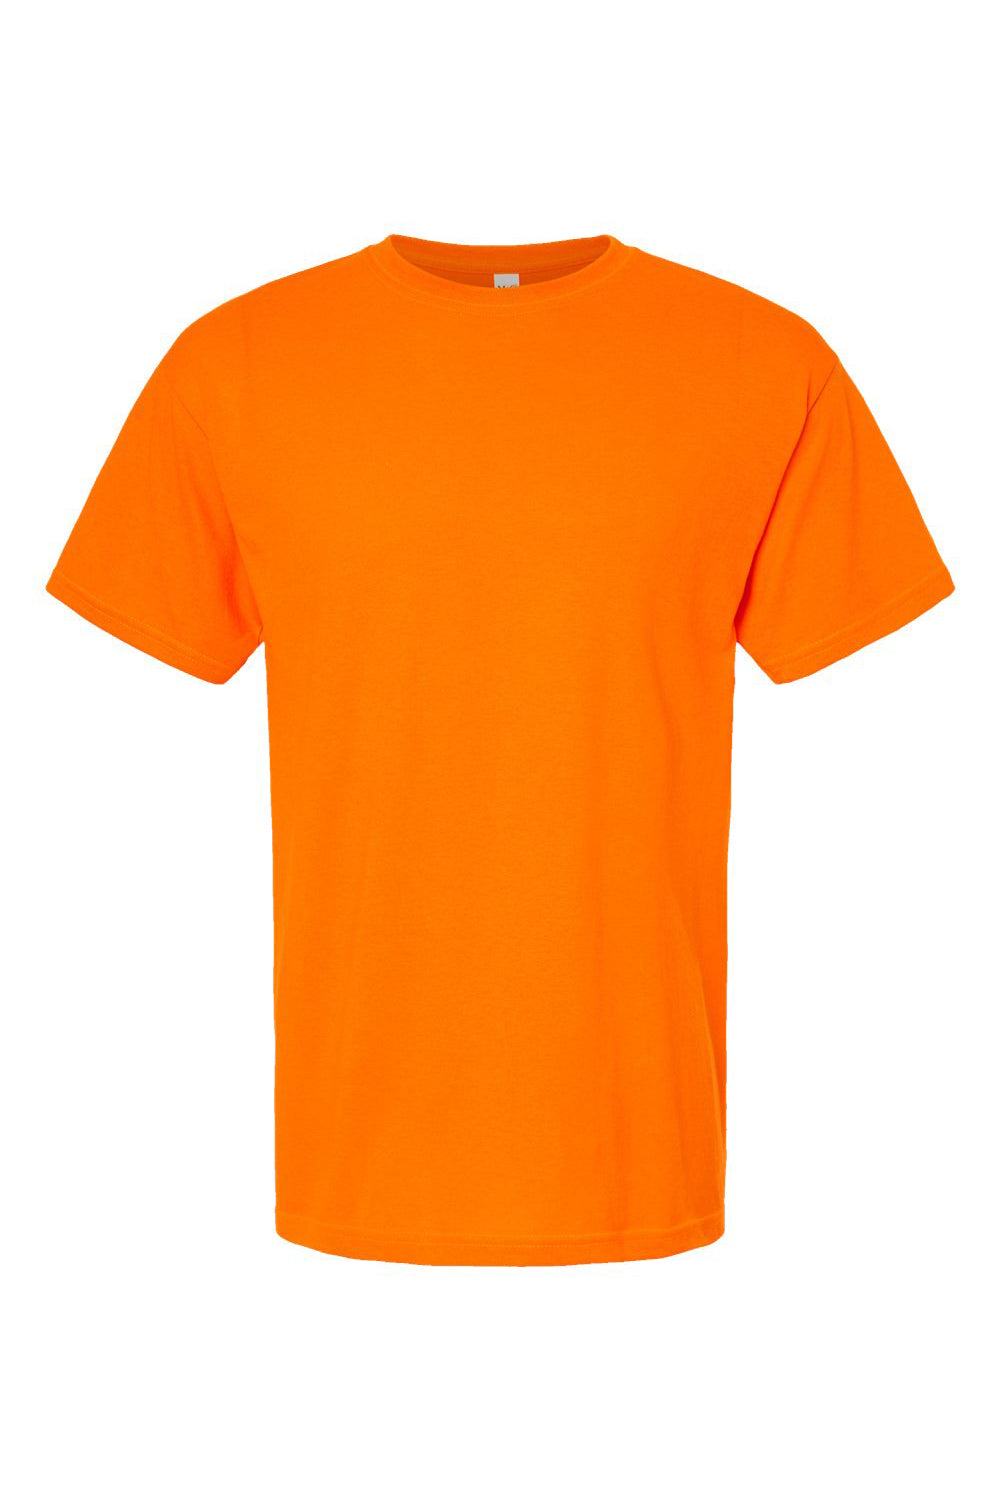 M&O 4800 Mens Gold Soft Touch Short Sleeve Crewneck T-Shirt Safety Orange Flat Front